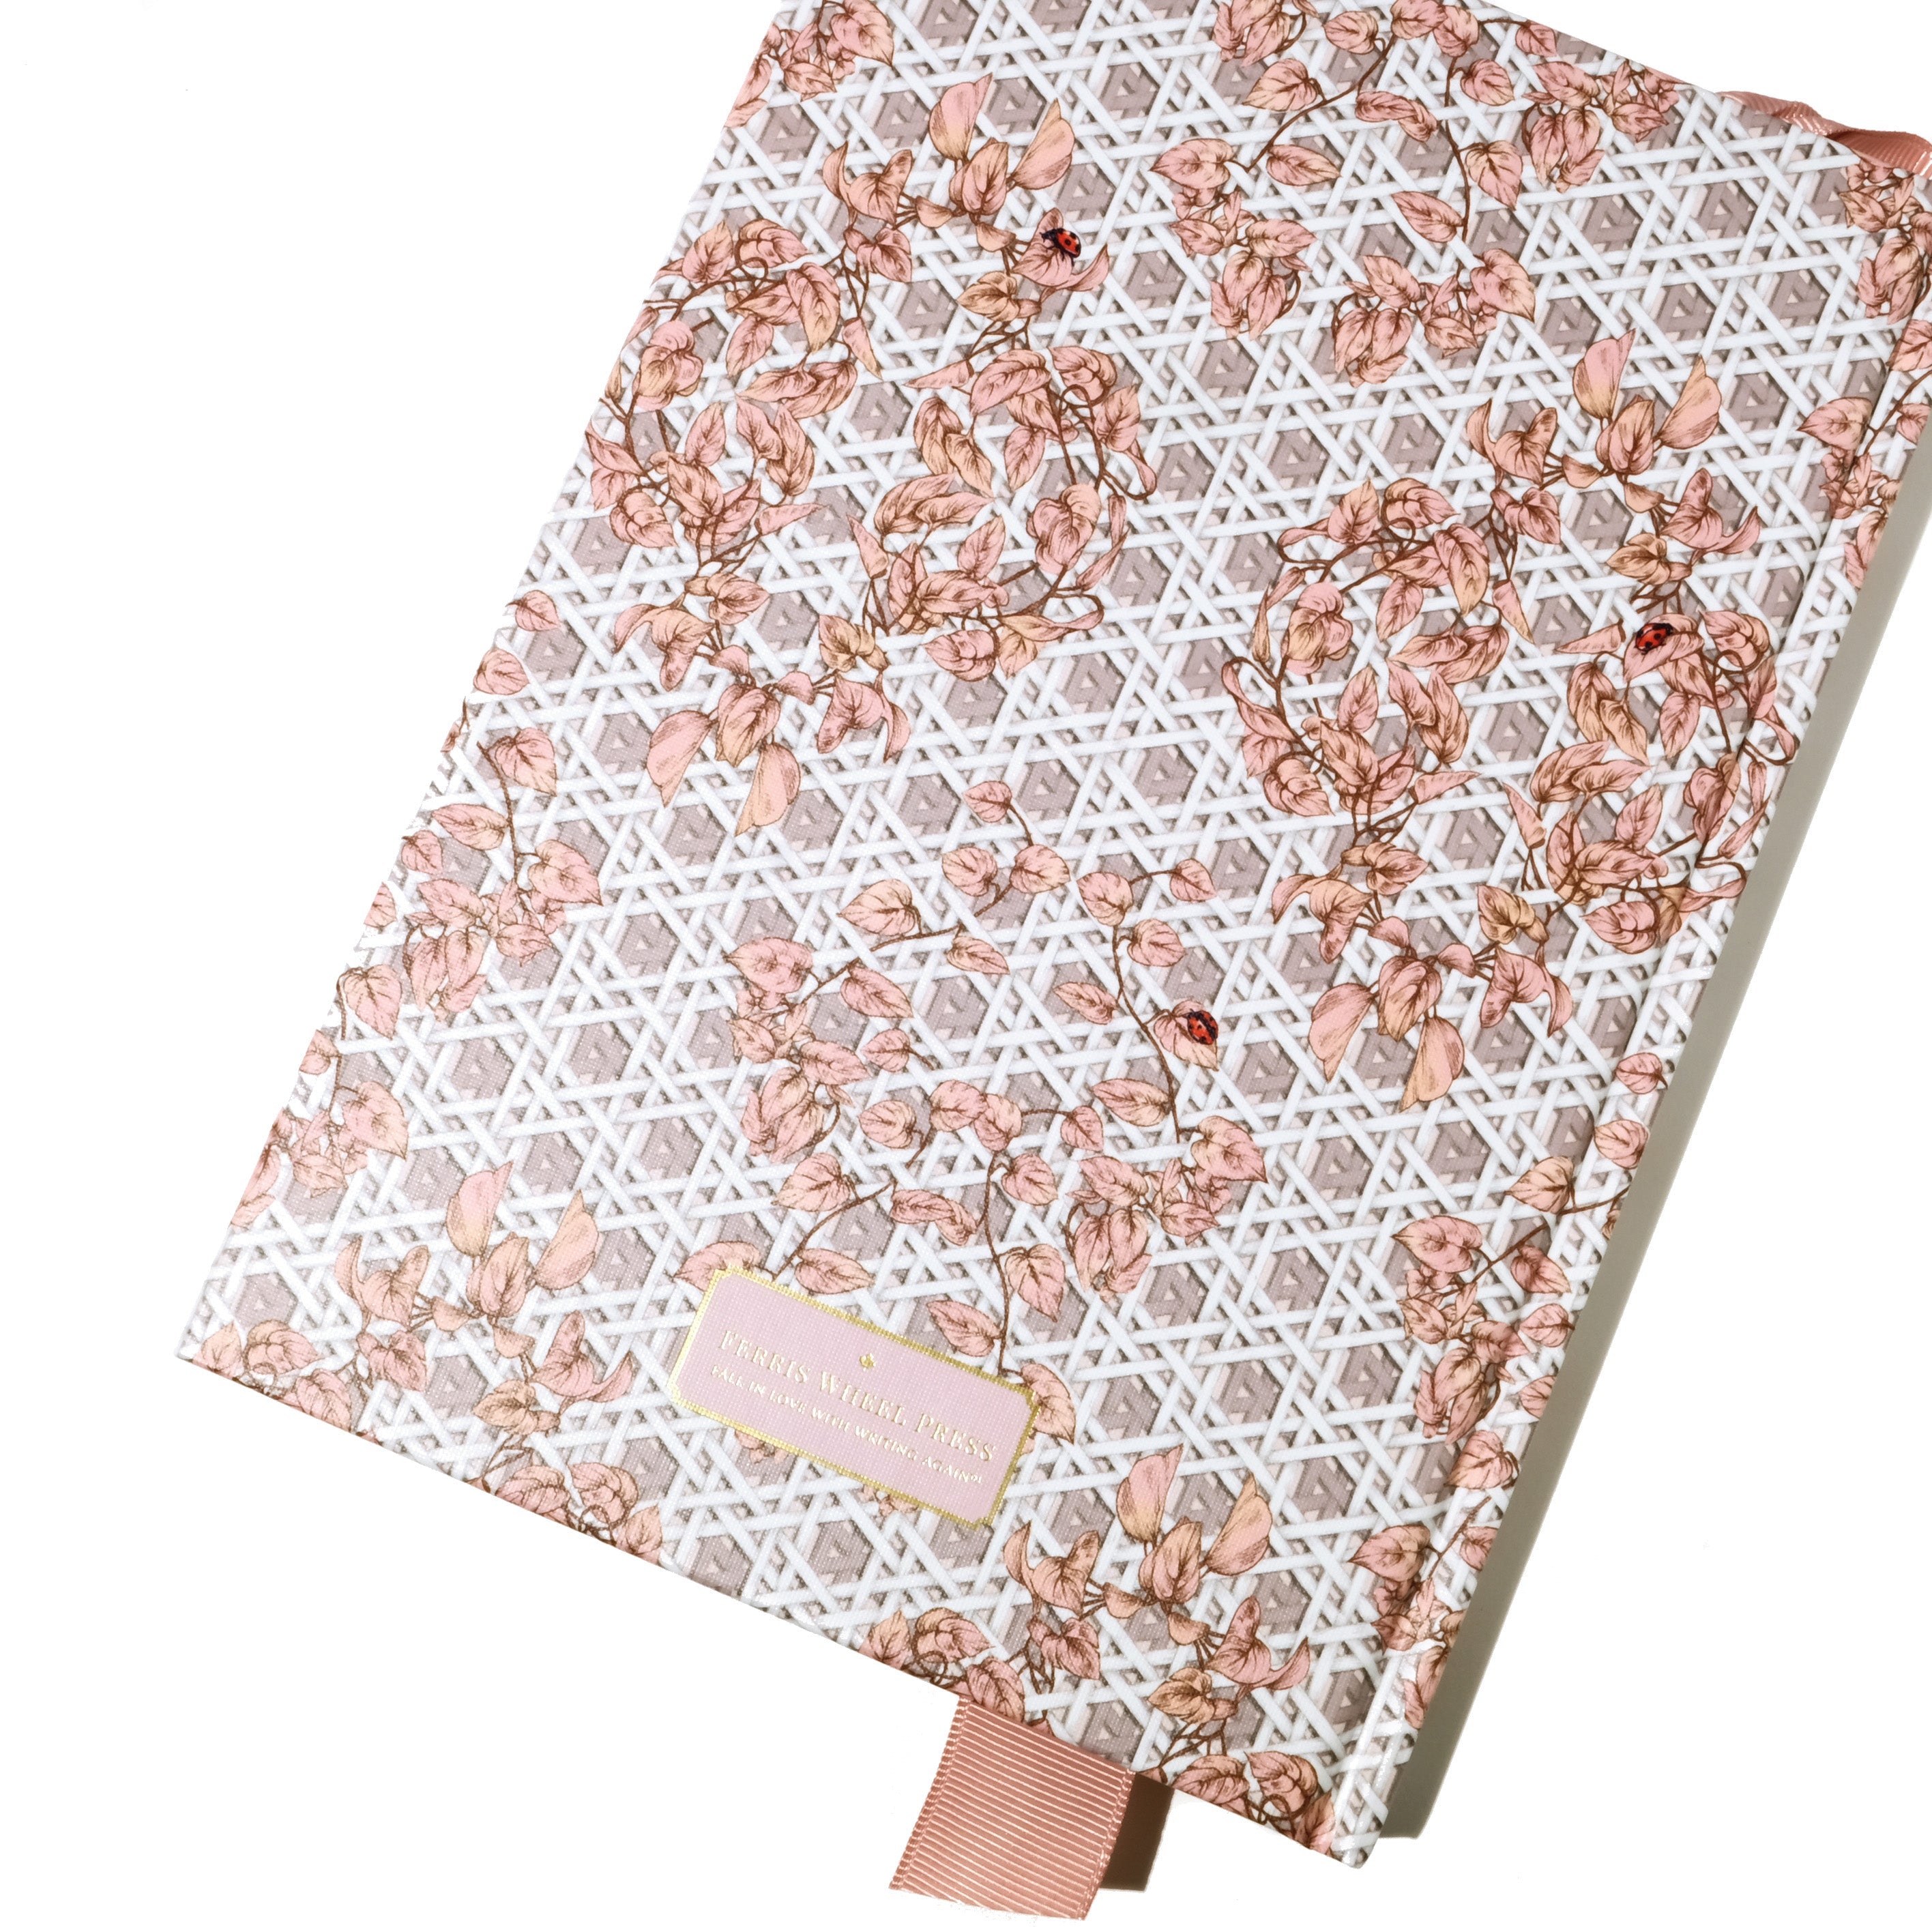 The Sketchbook A5 Enveloped in Rattan - Pink